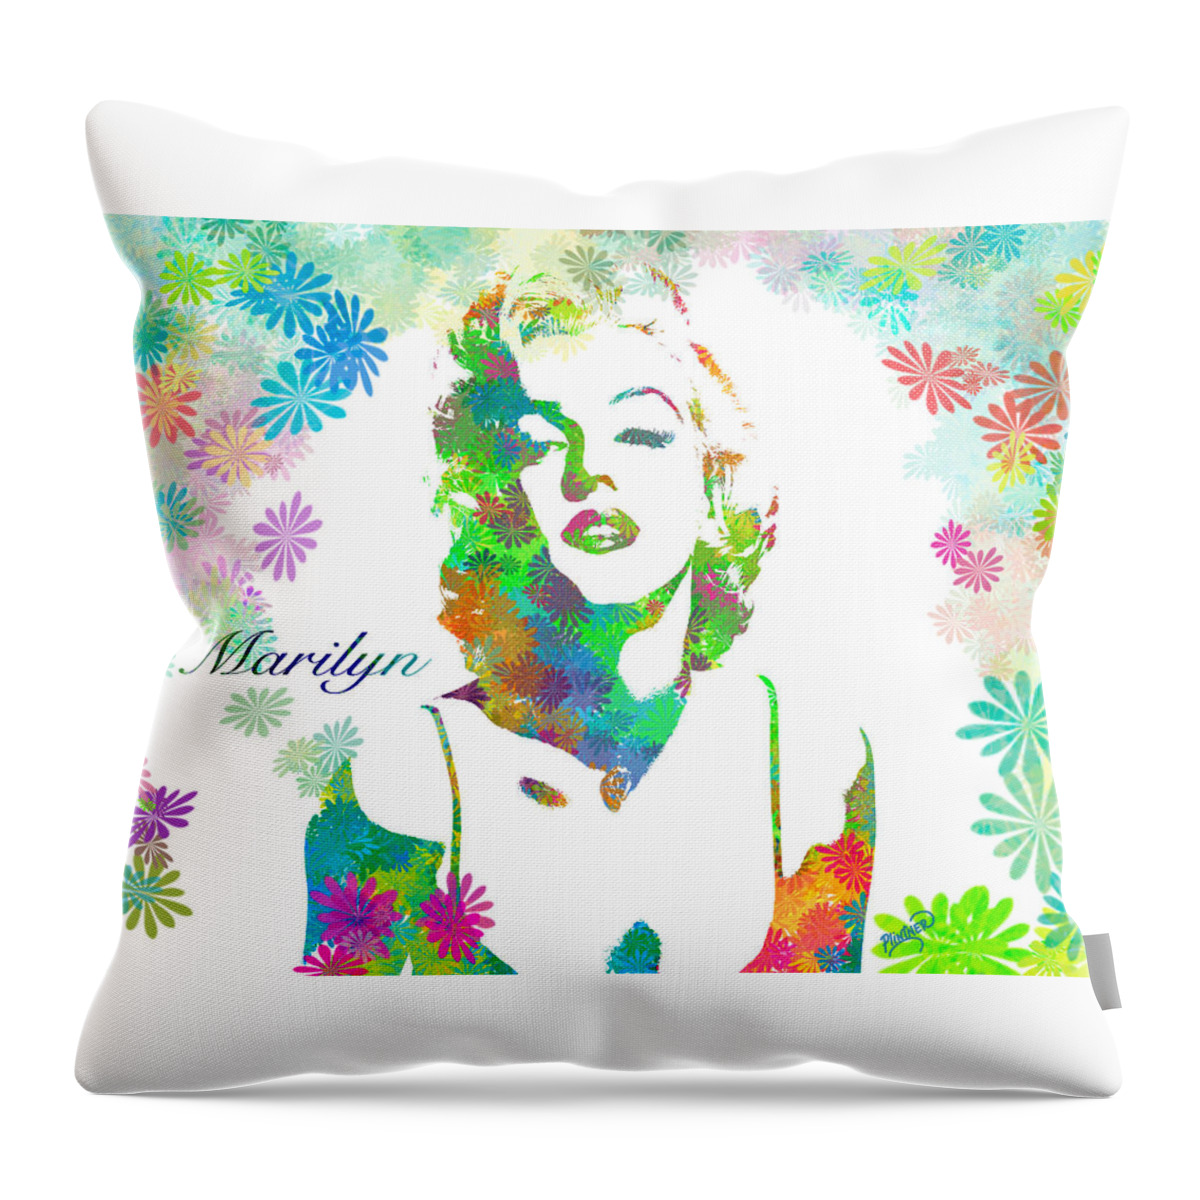 Marilyn Monroe Throw Pillow featuring the digital art Marilyn Monroe Flowering Beauty by Patricia Lintner